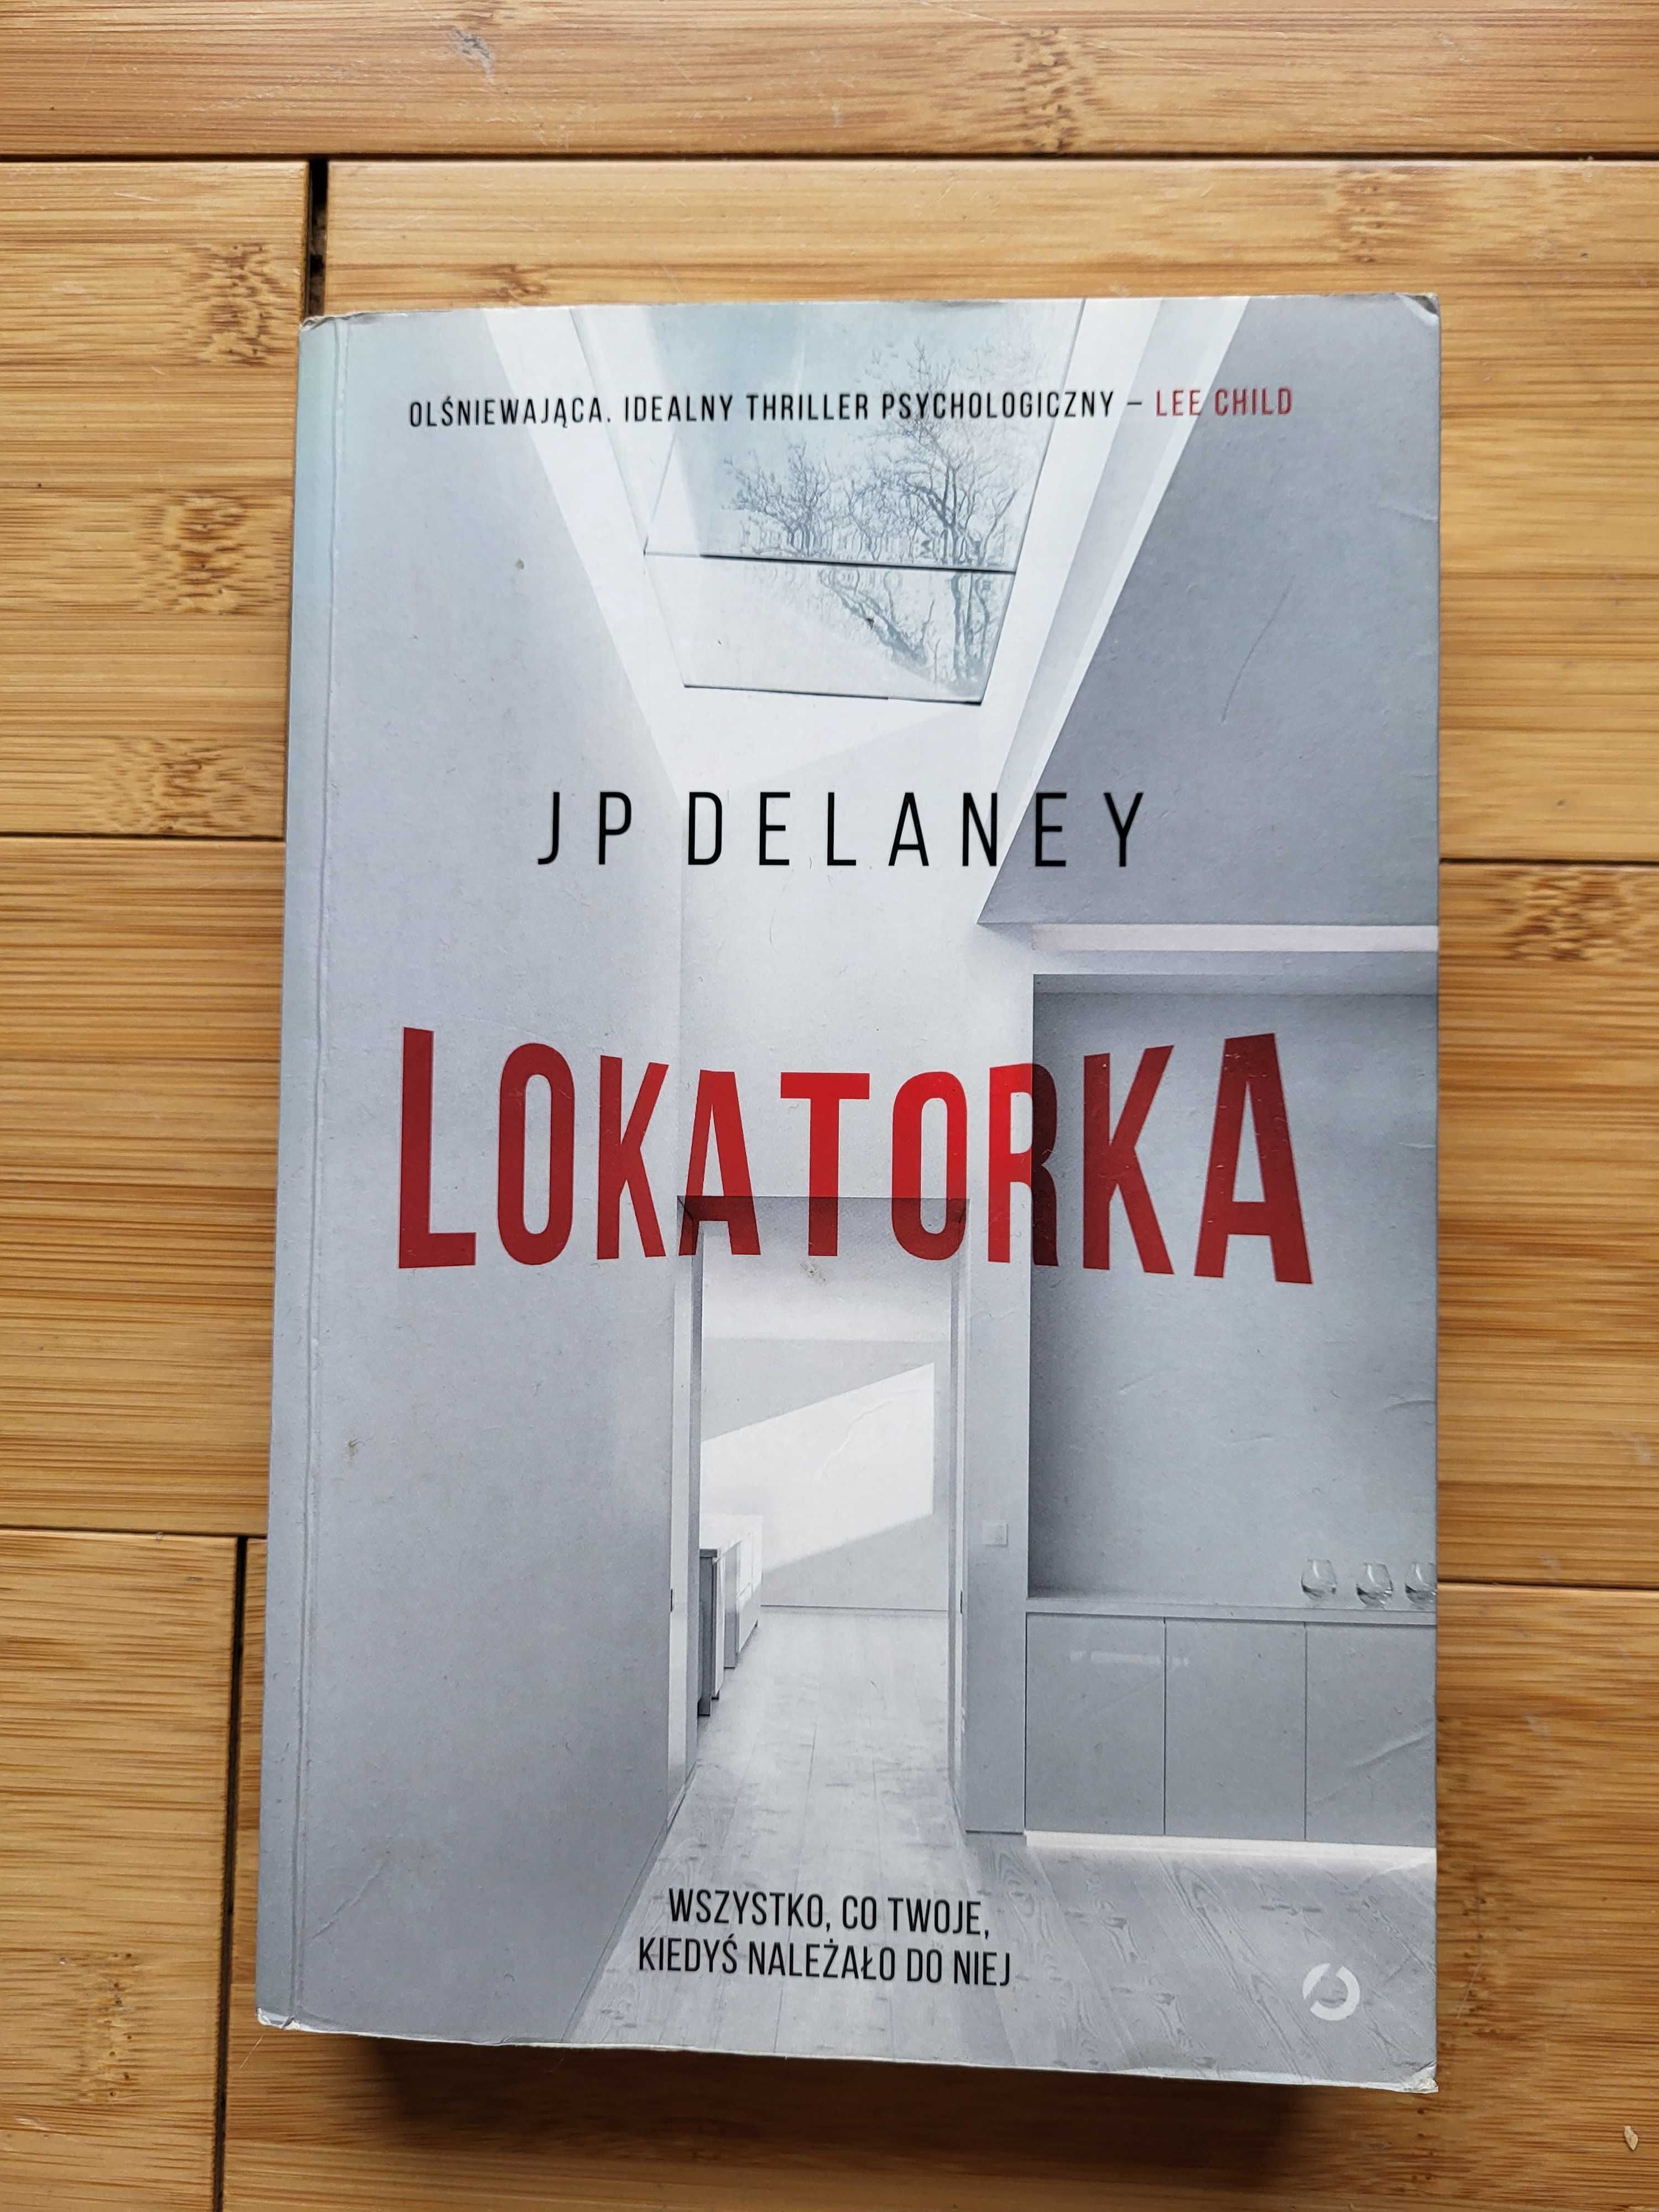 Książka "Lokatorka" JP Delaney thriller psychologiczny